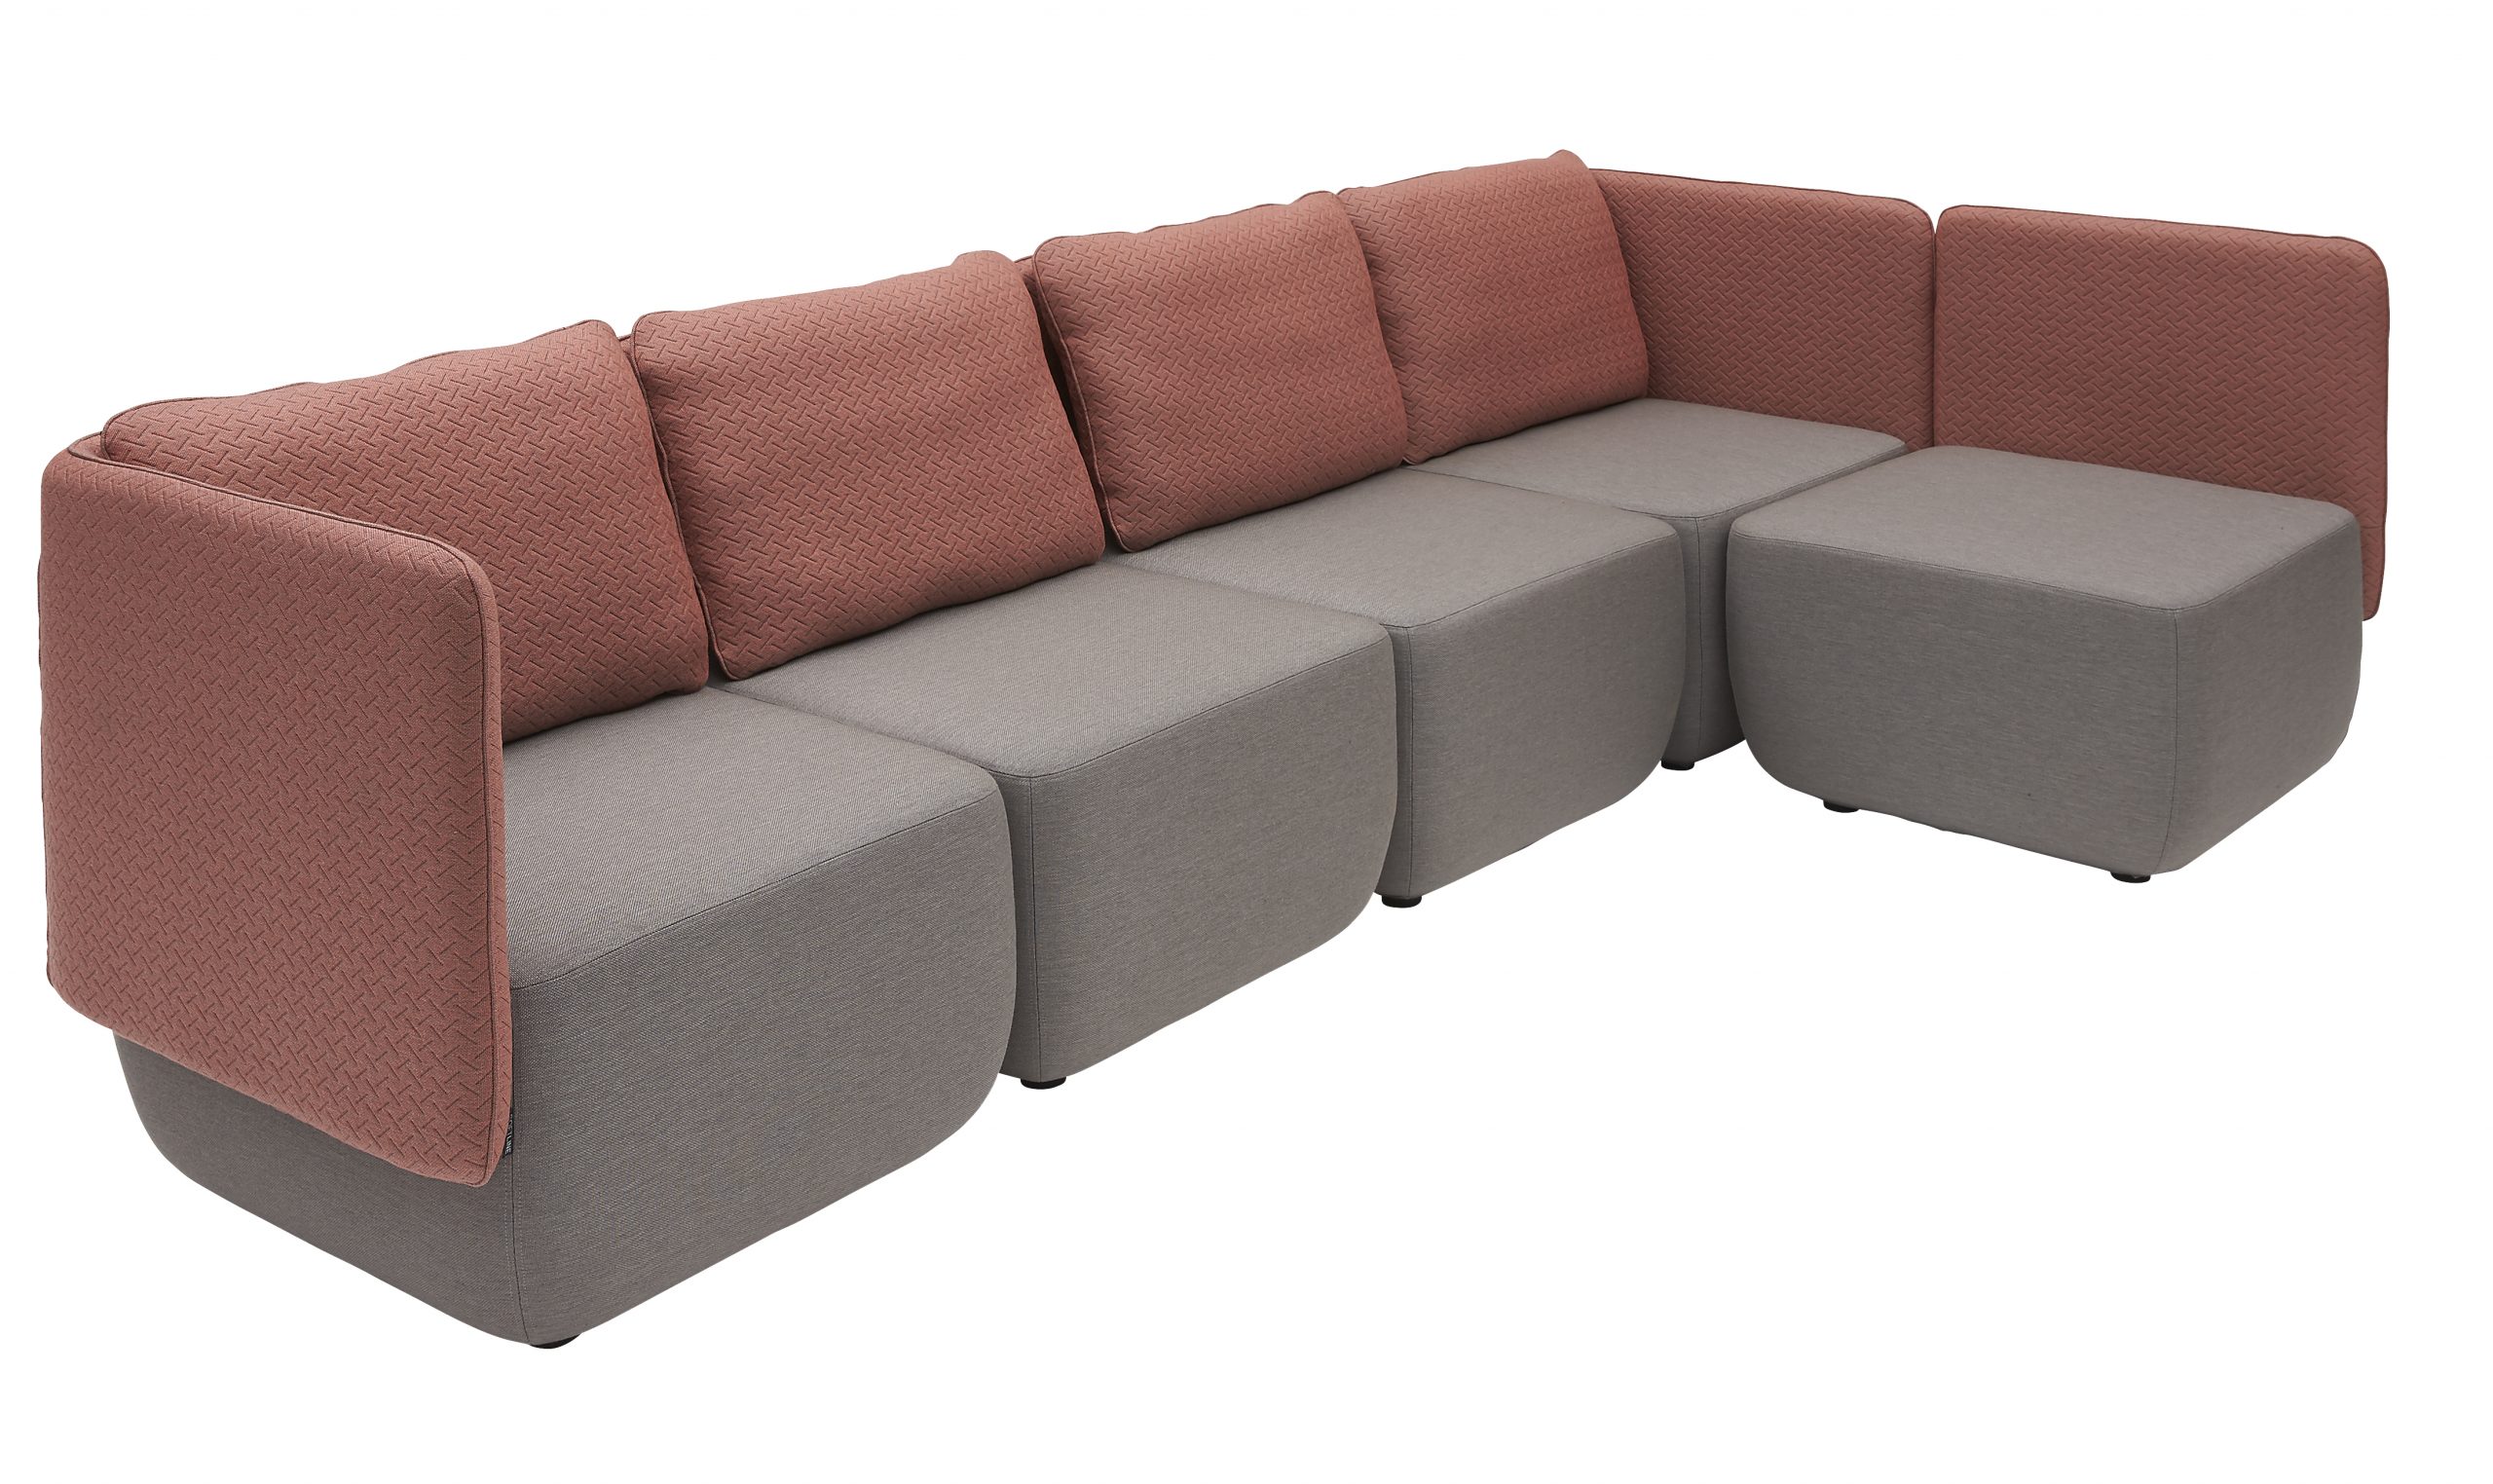 opera-modular-sofa-high-res-28-scaled.jpg